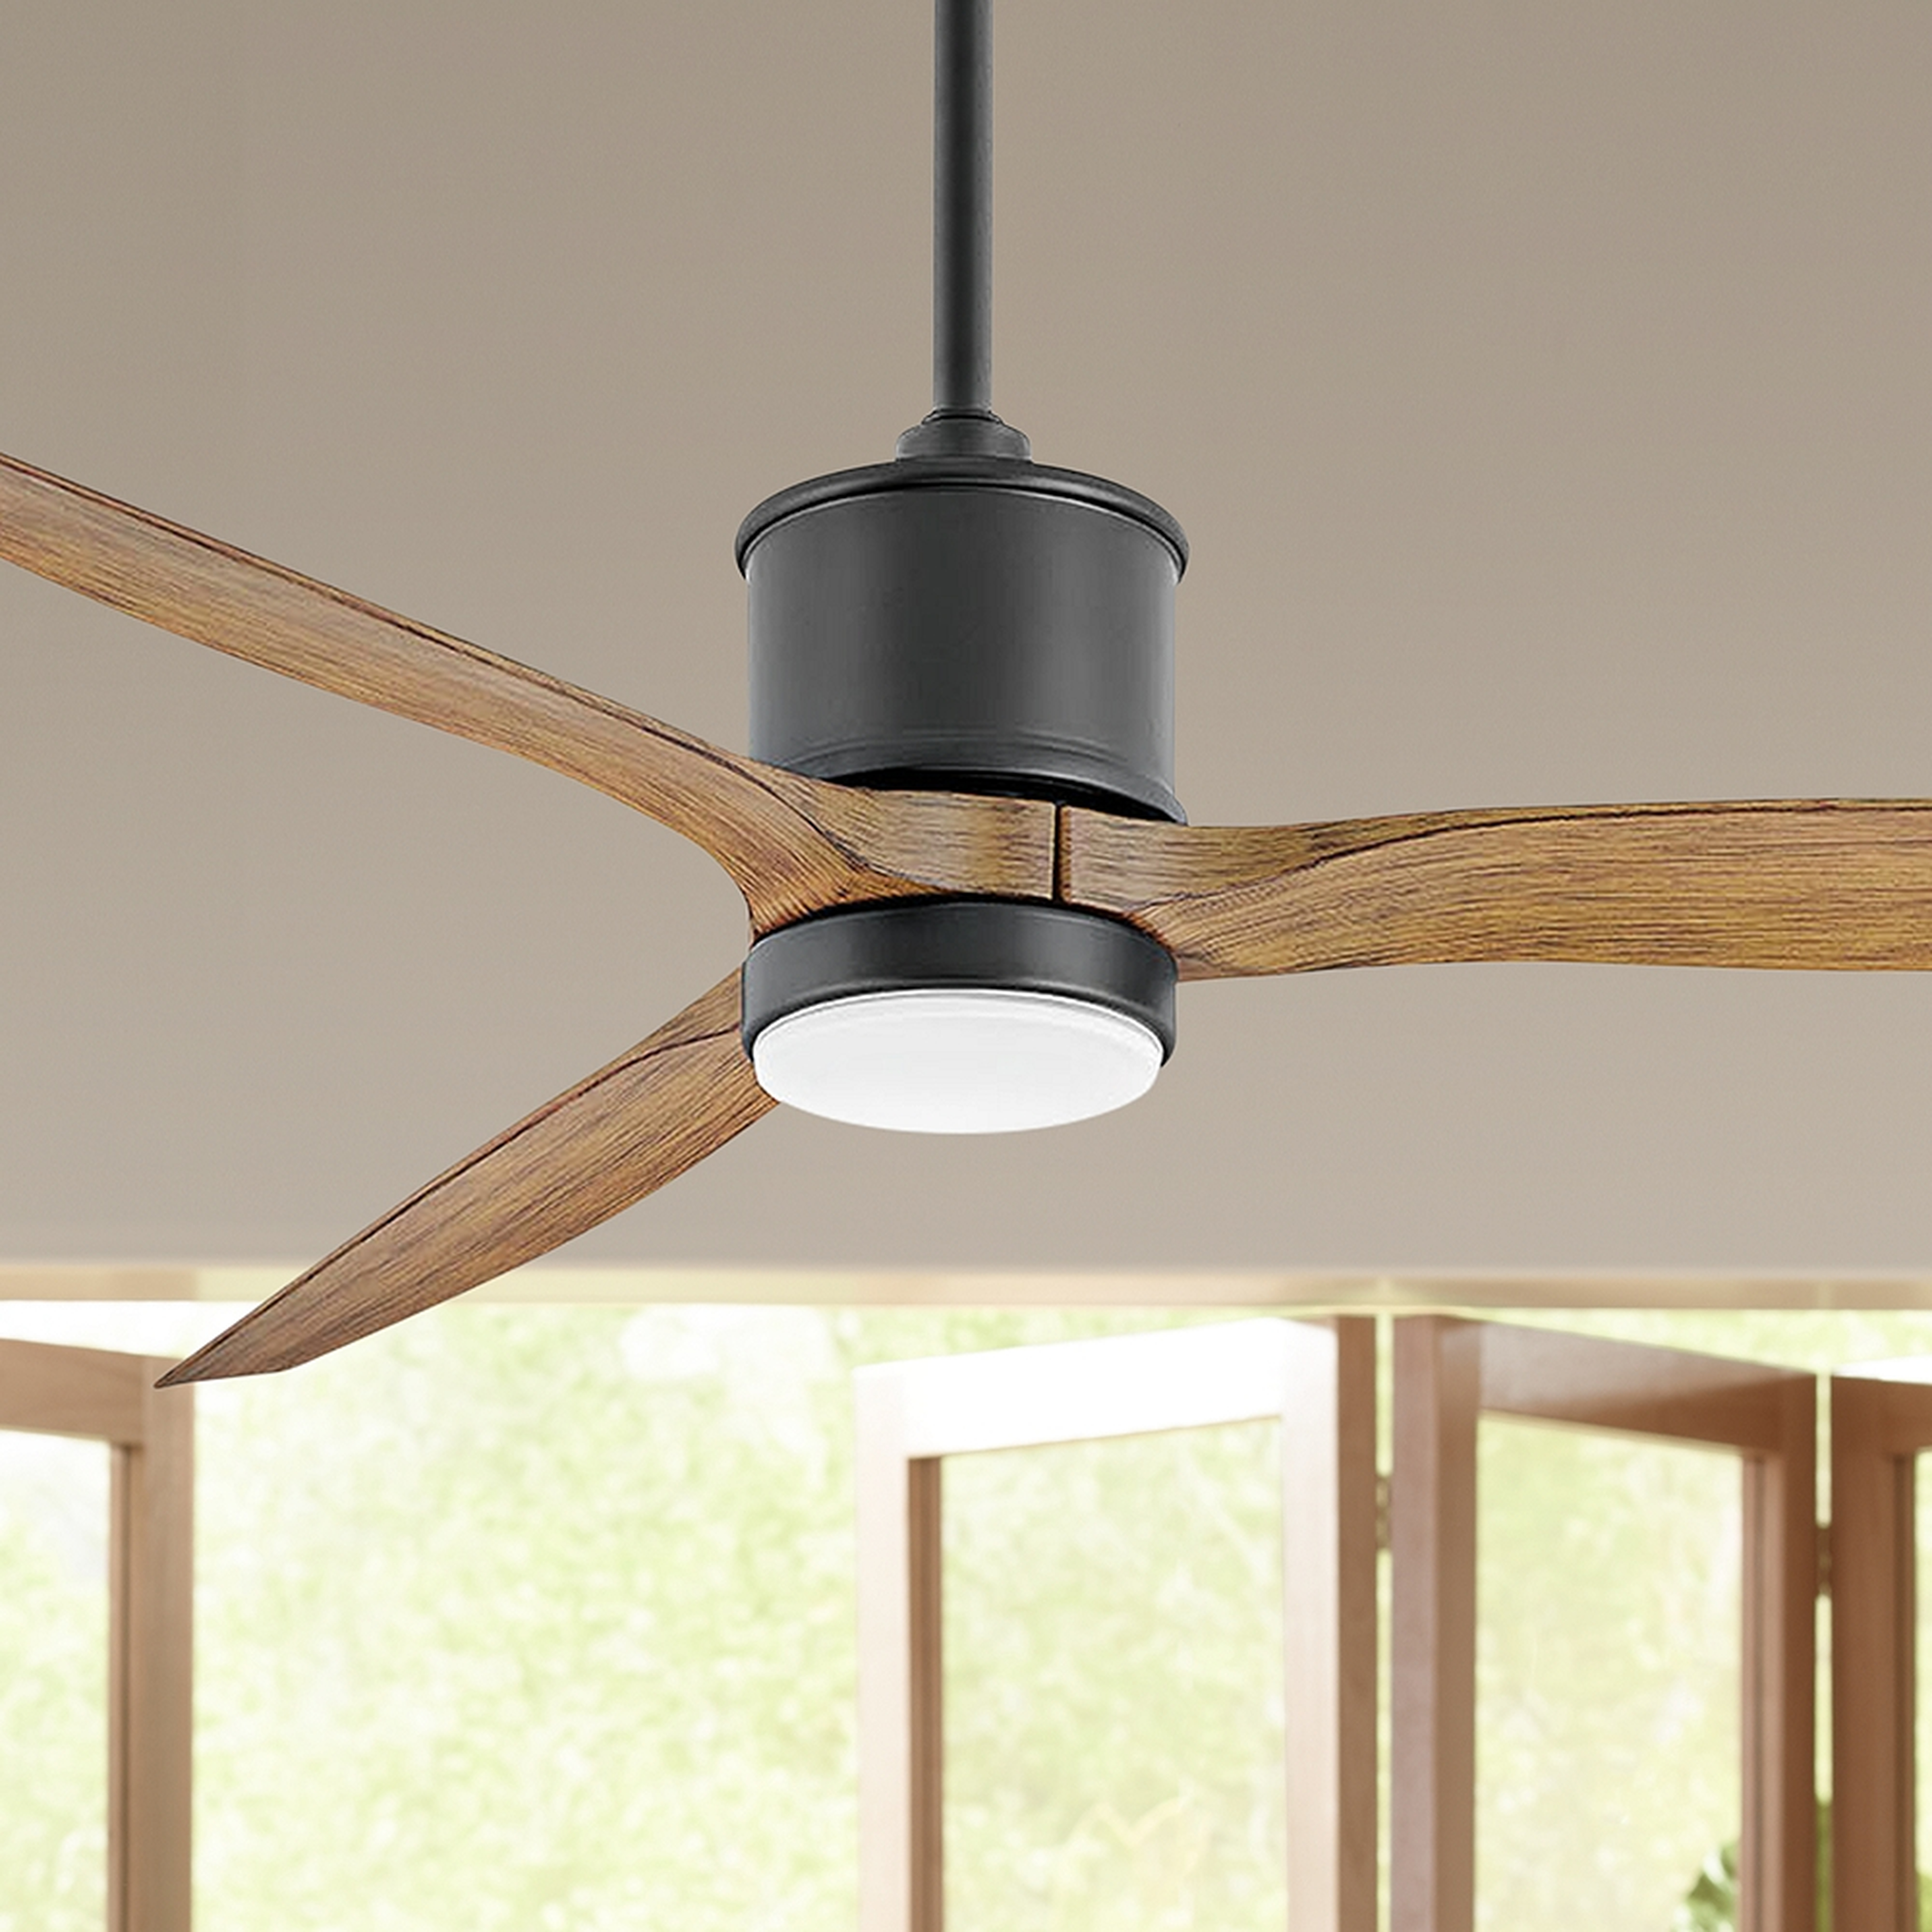 60" Hinkley Hover Matte Black Wet LED Ceiling Fan - Style # 84J77, 72" Downrod - Lamps Plus